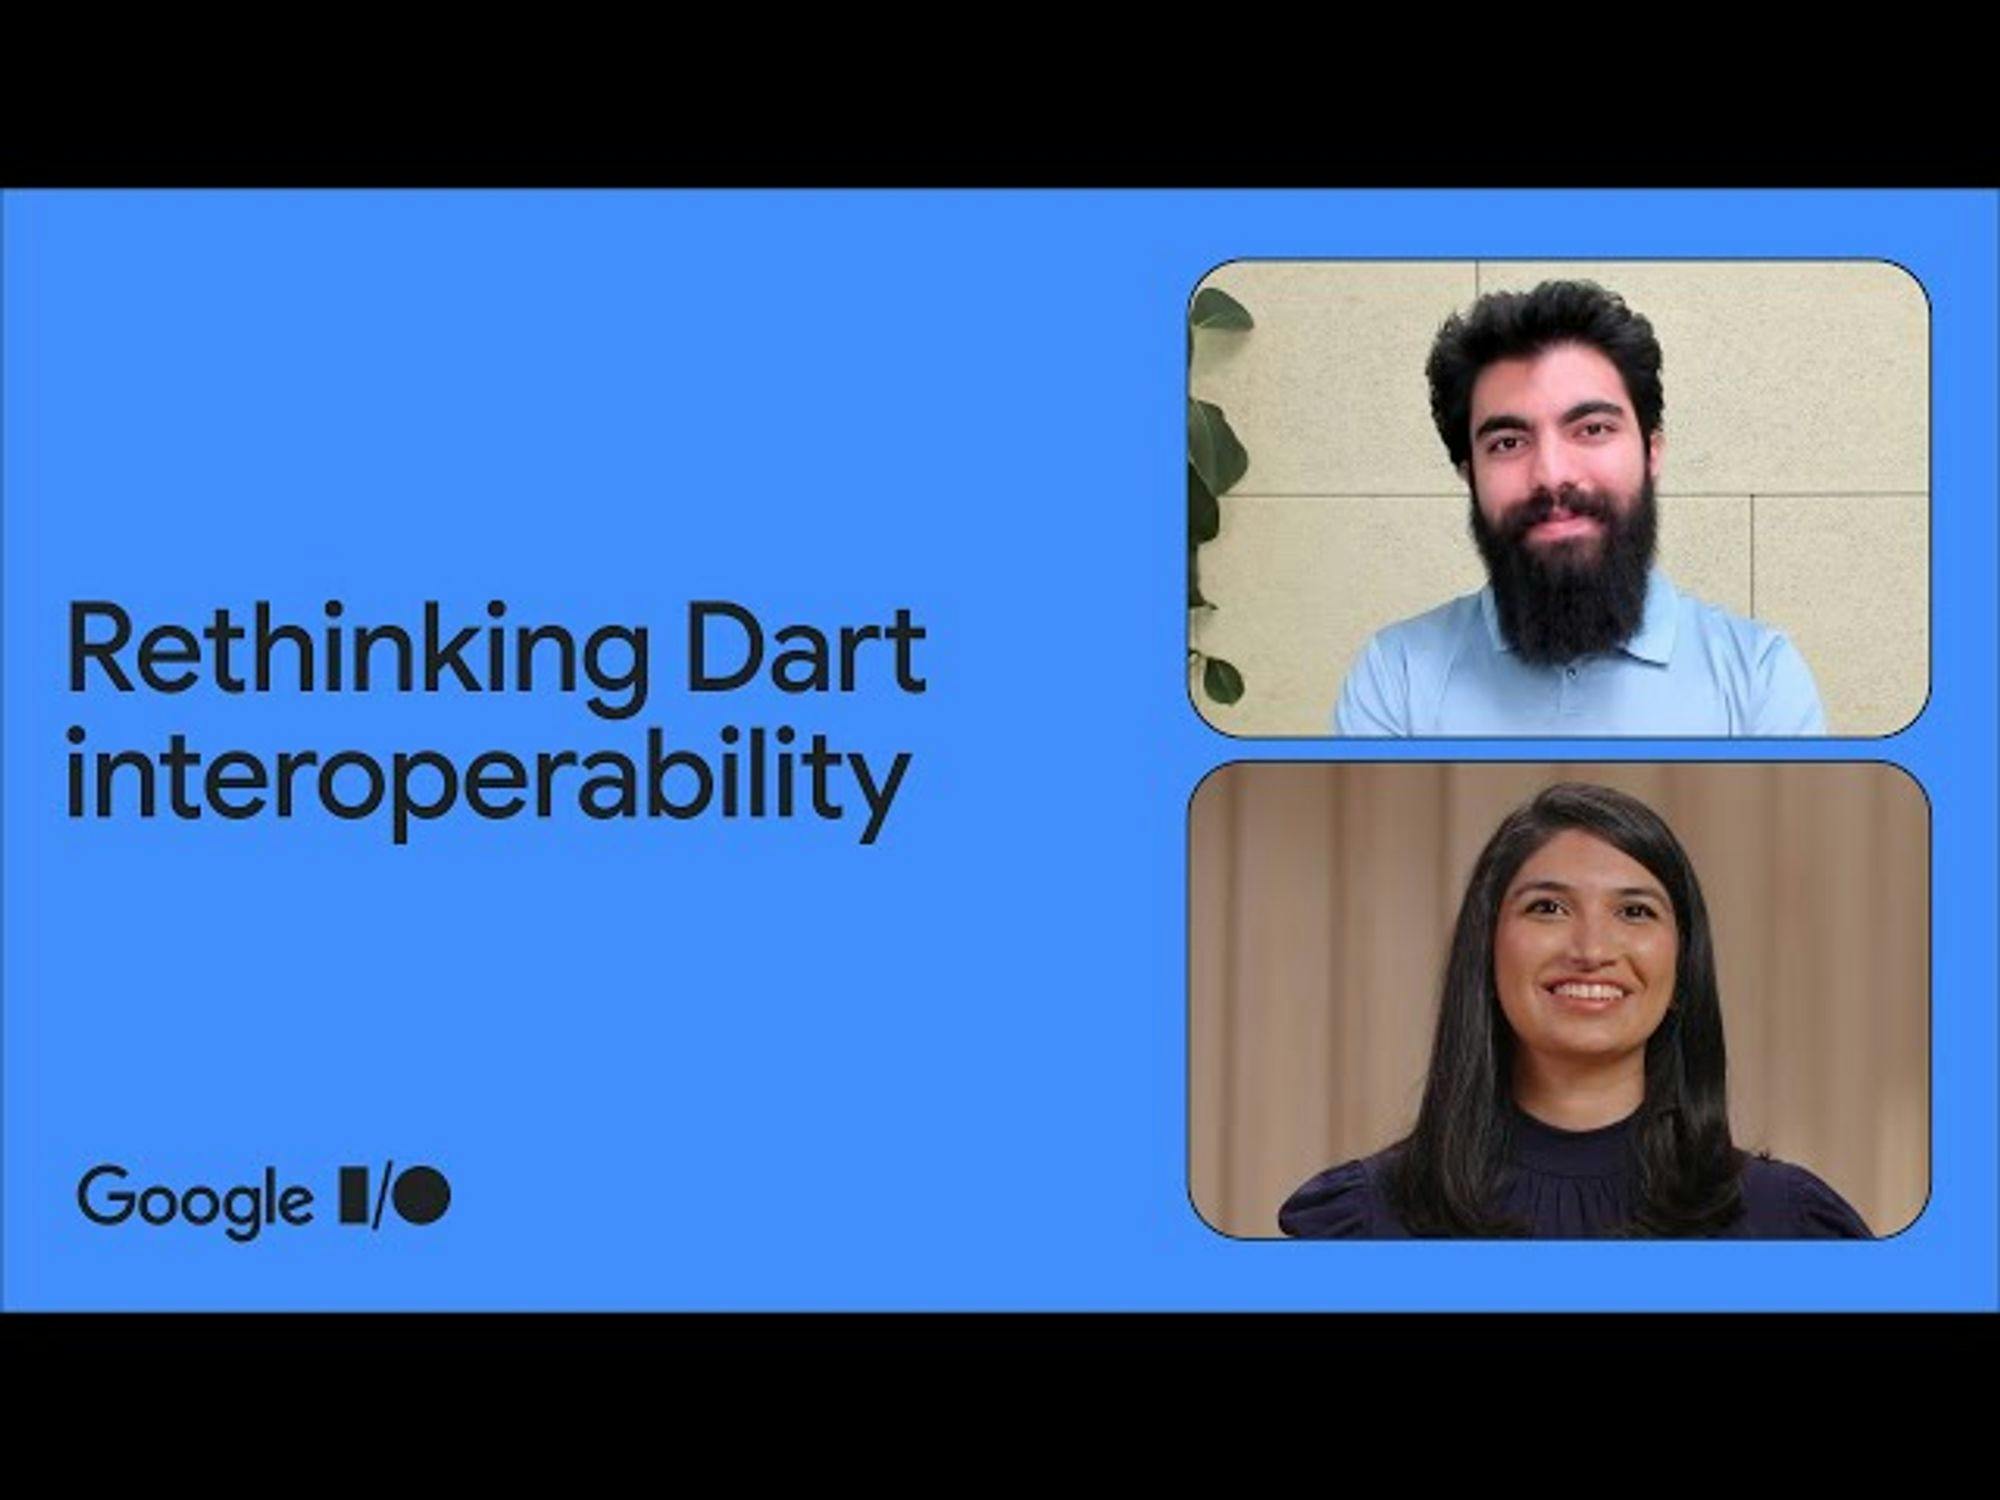 Rethinking Dart interoperability with Android